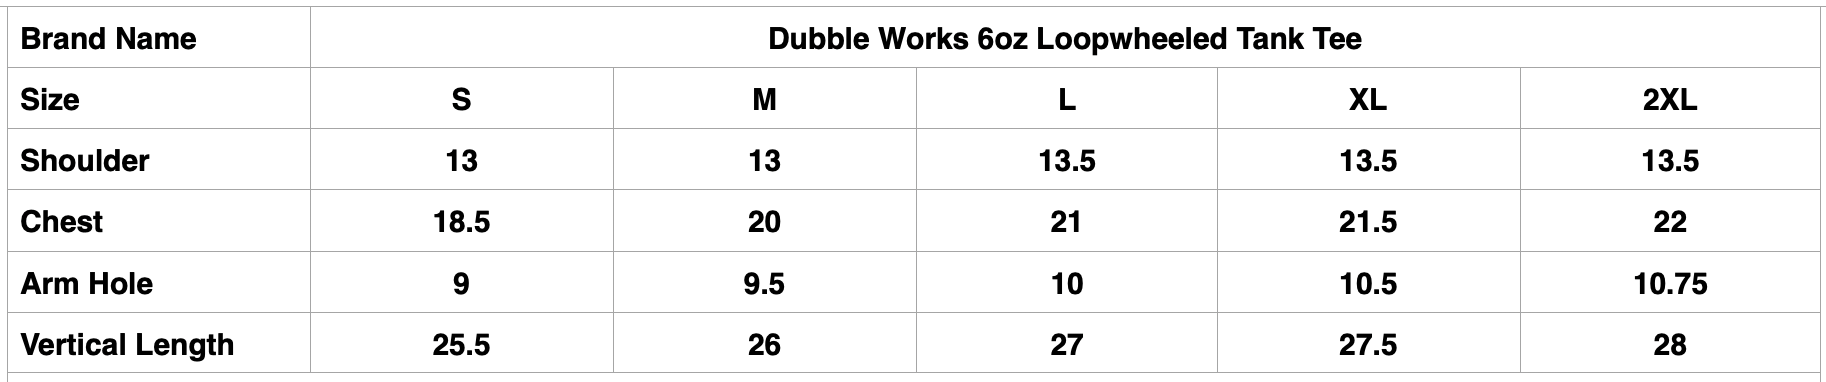 Dubble Works 6oz Loopwheeled Tank Tee (Egg)